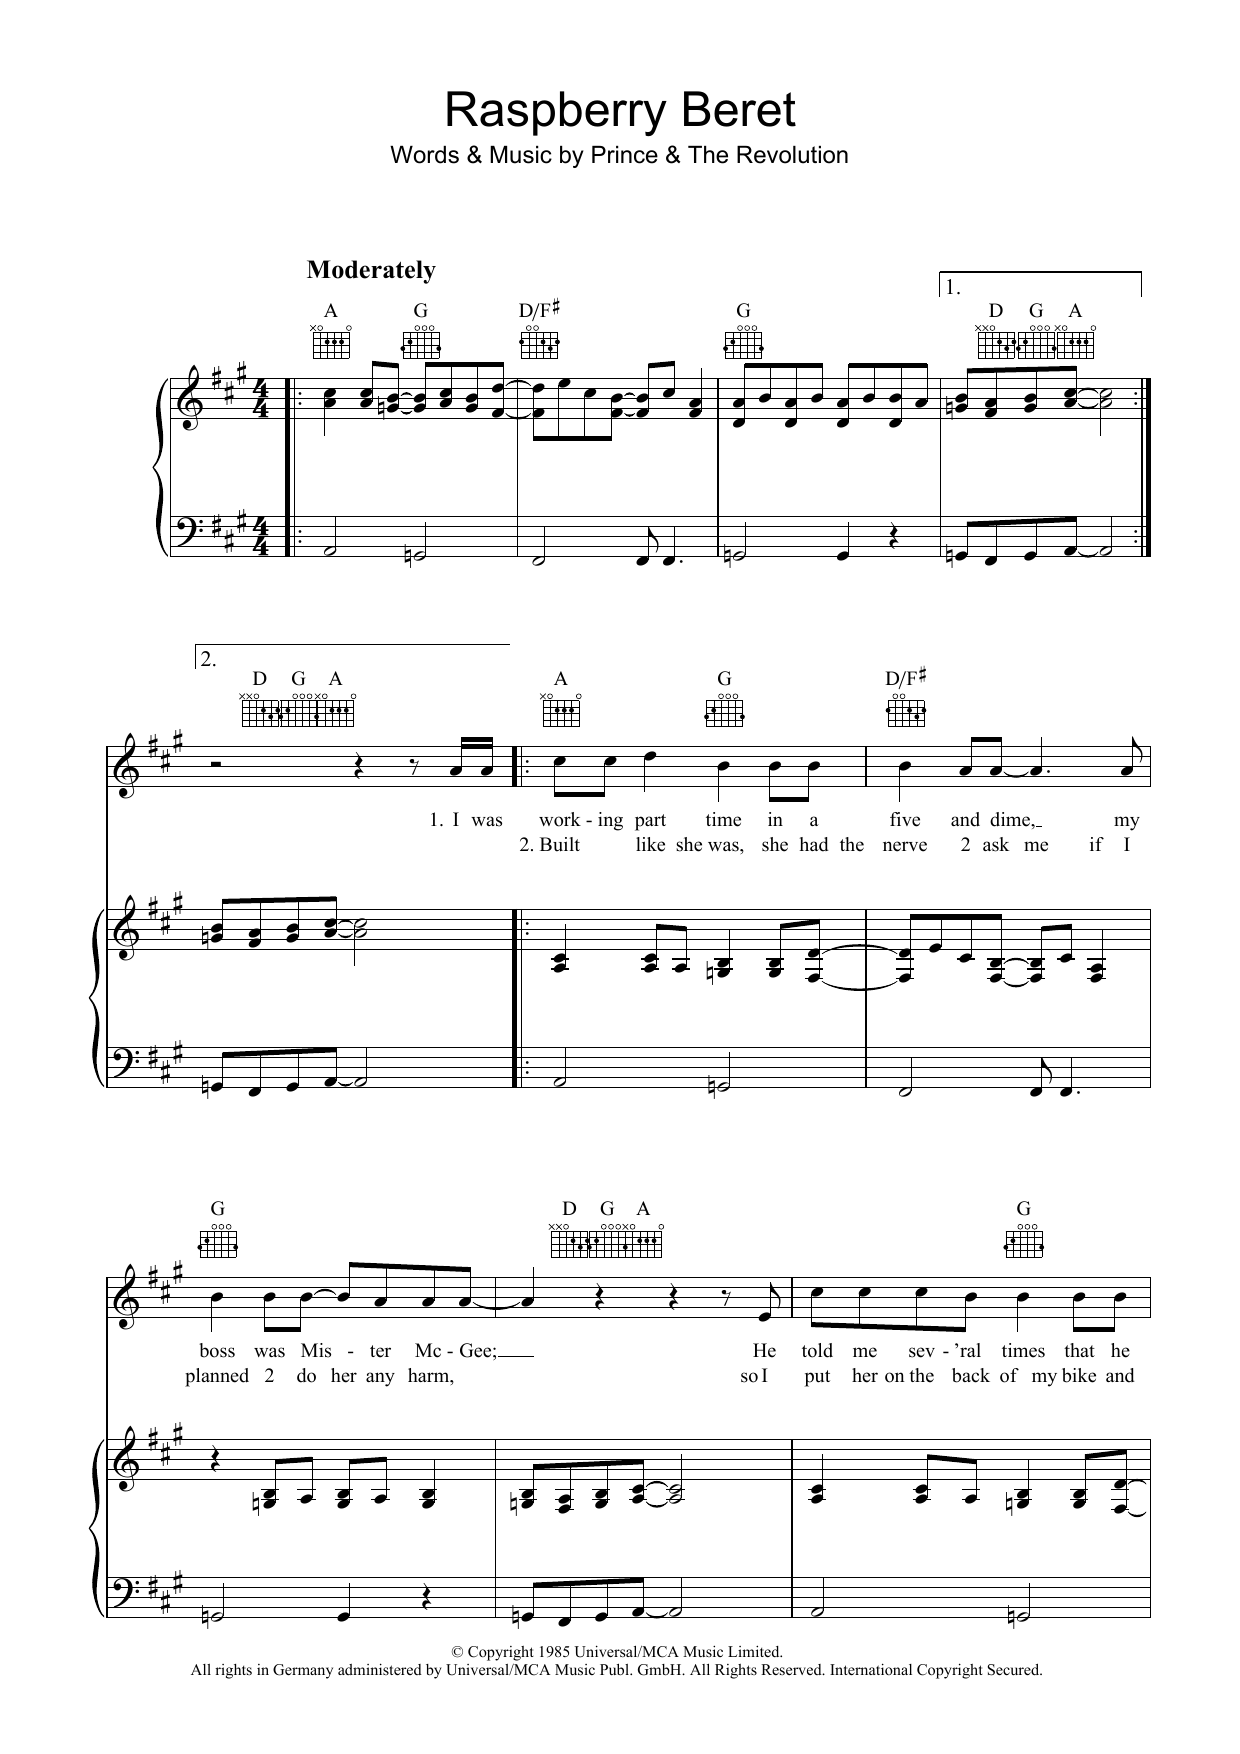 Prince Raspberry Beret Sheet Music Notes & Chords for Lyrics & Chords - Download or Print PDF